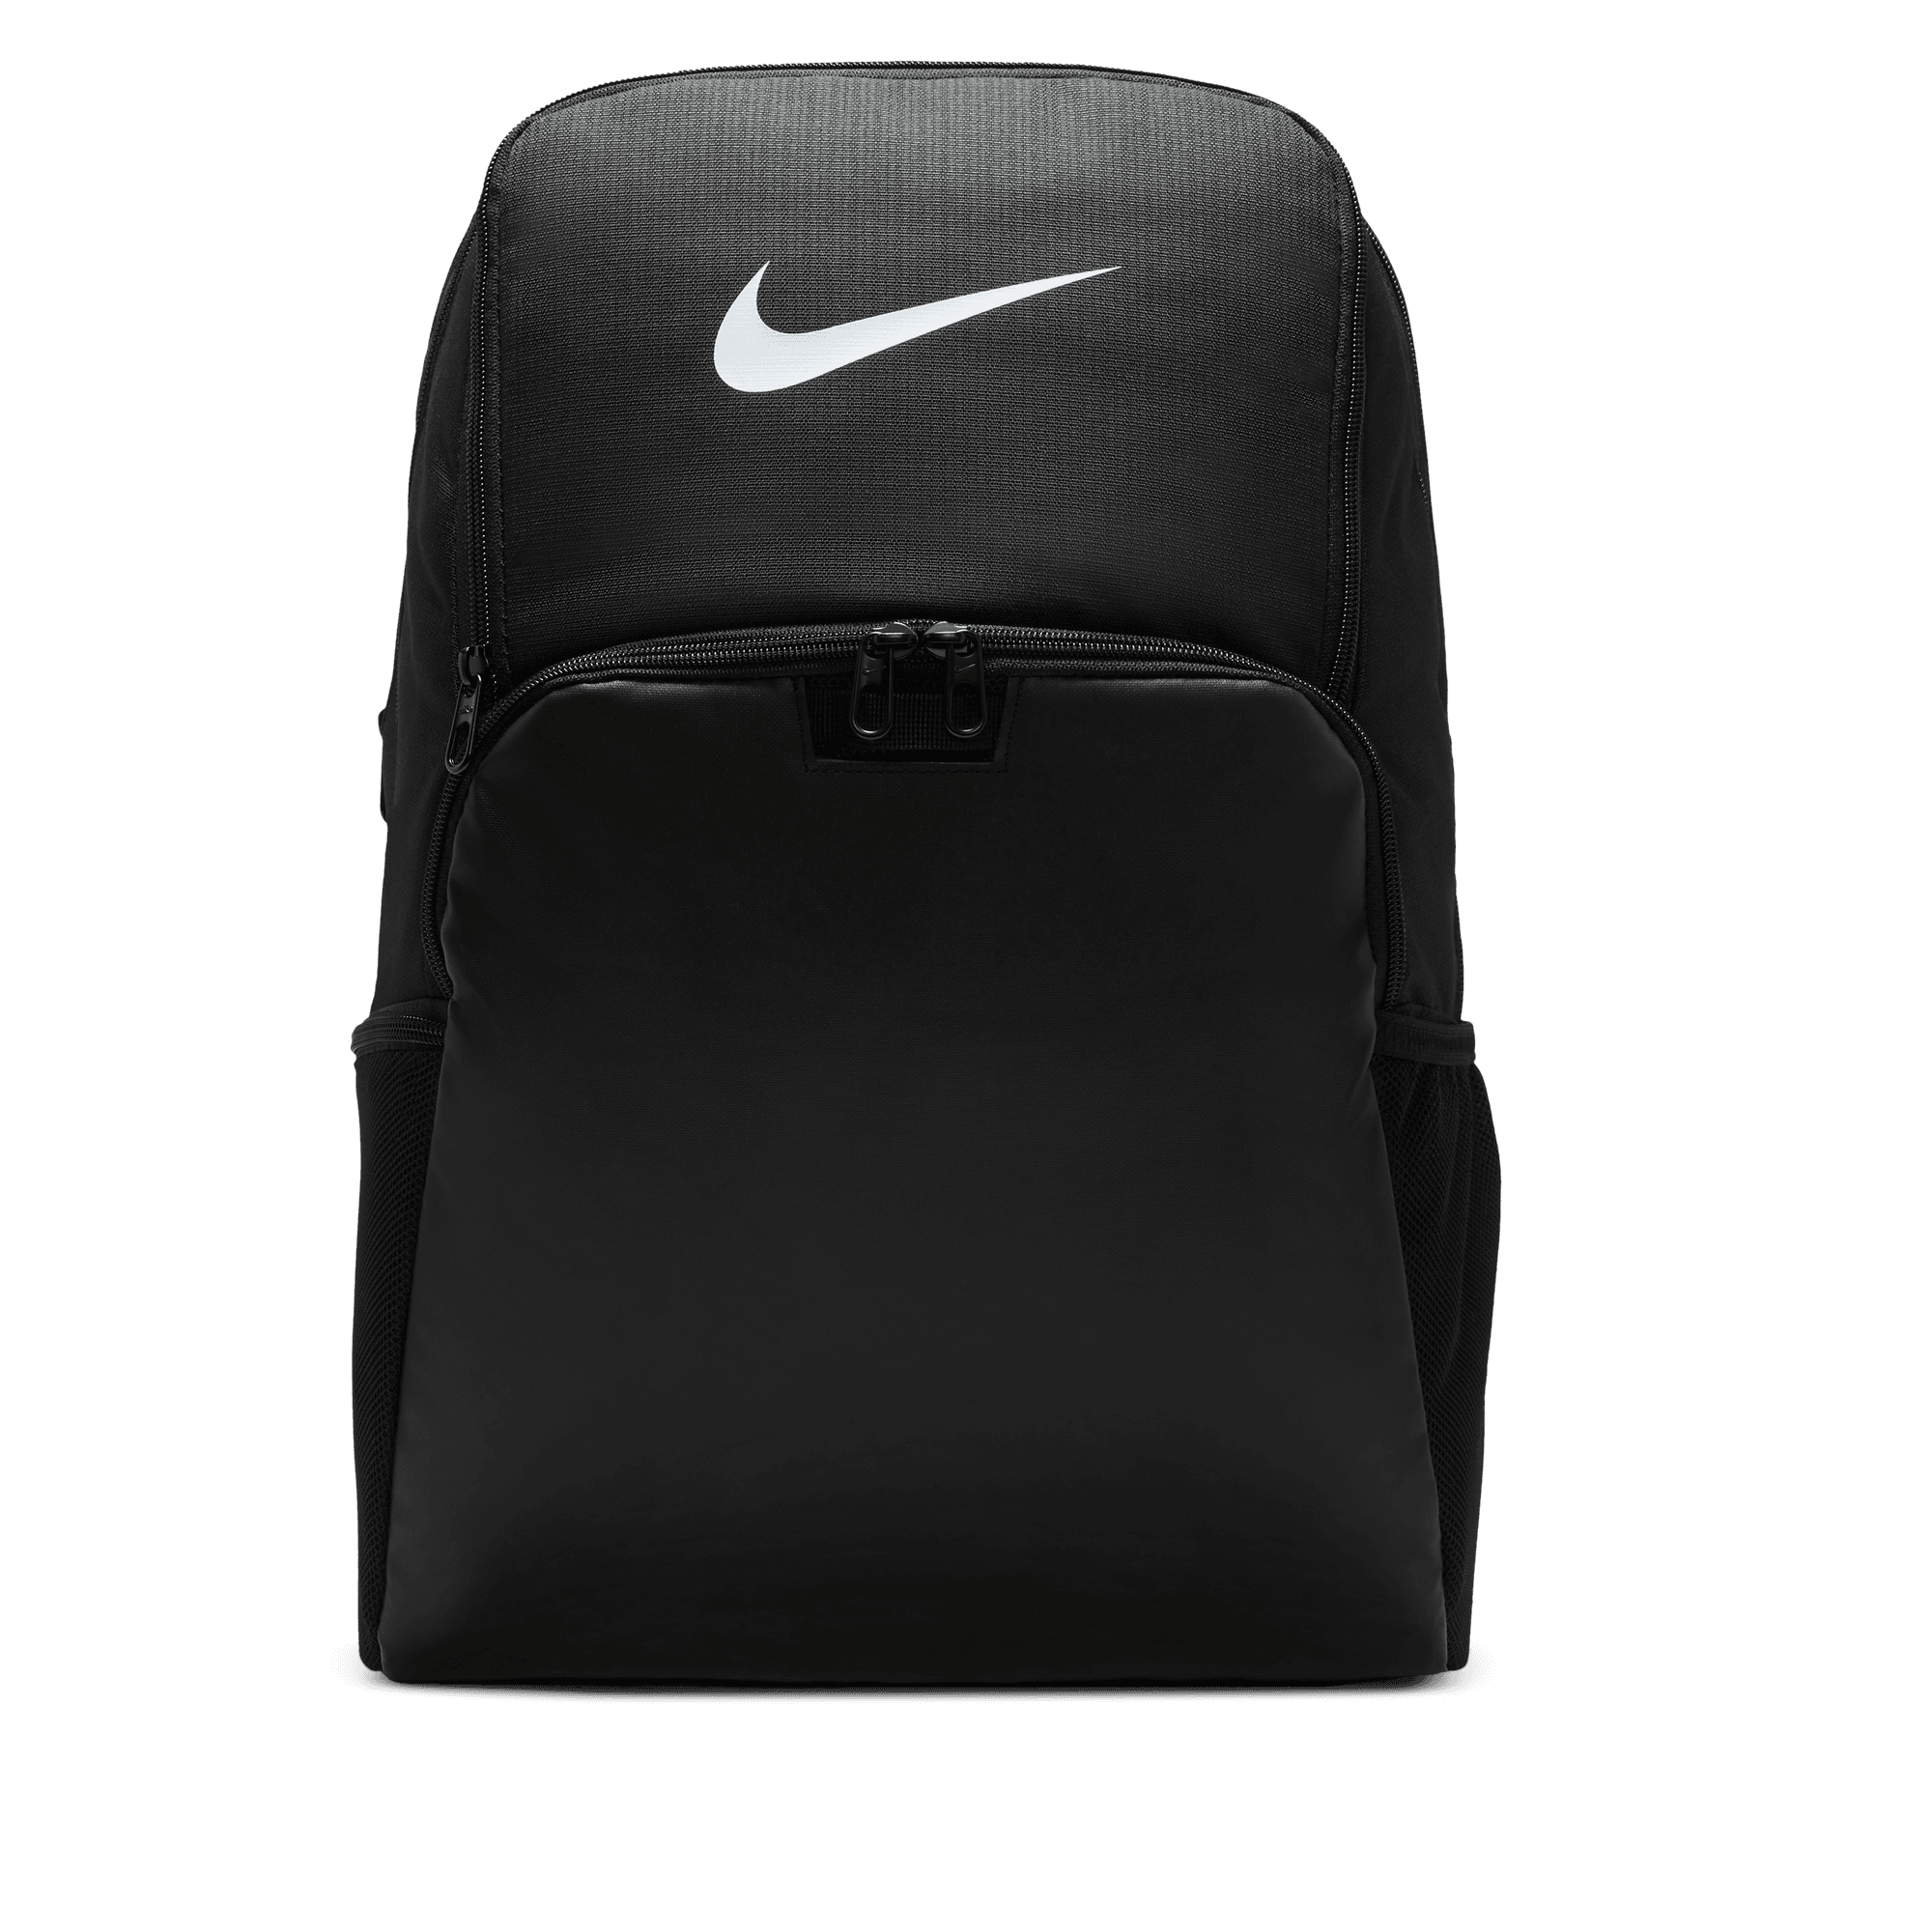 Nike Weightlifting Brasilia 9.5 Training Backpack - Navy/Black